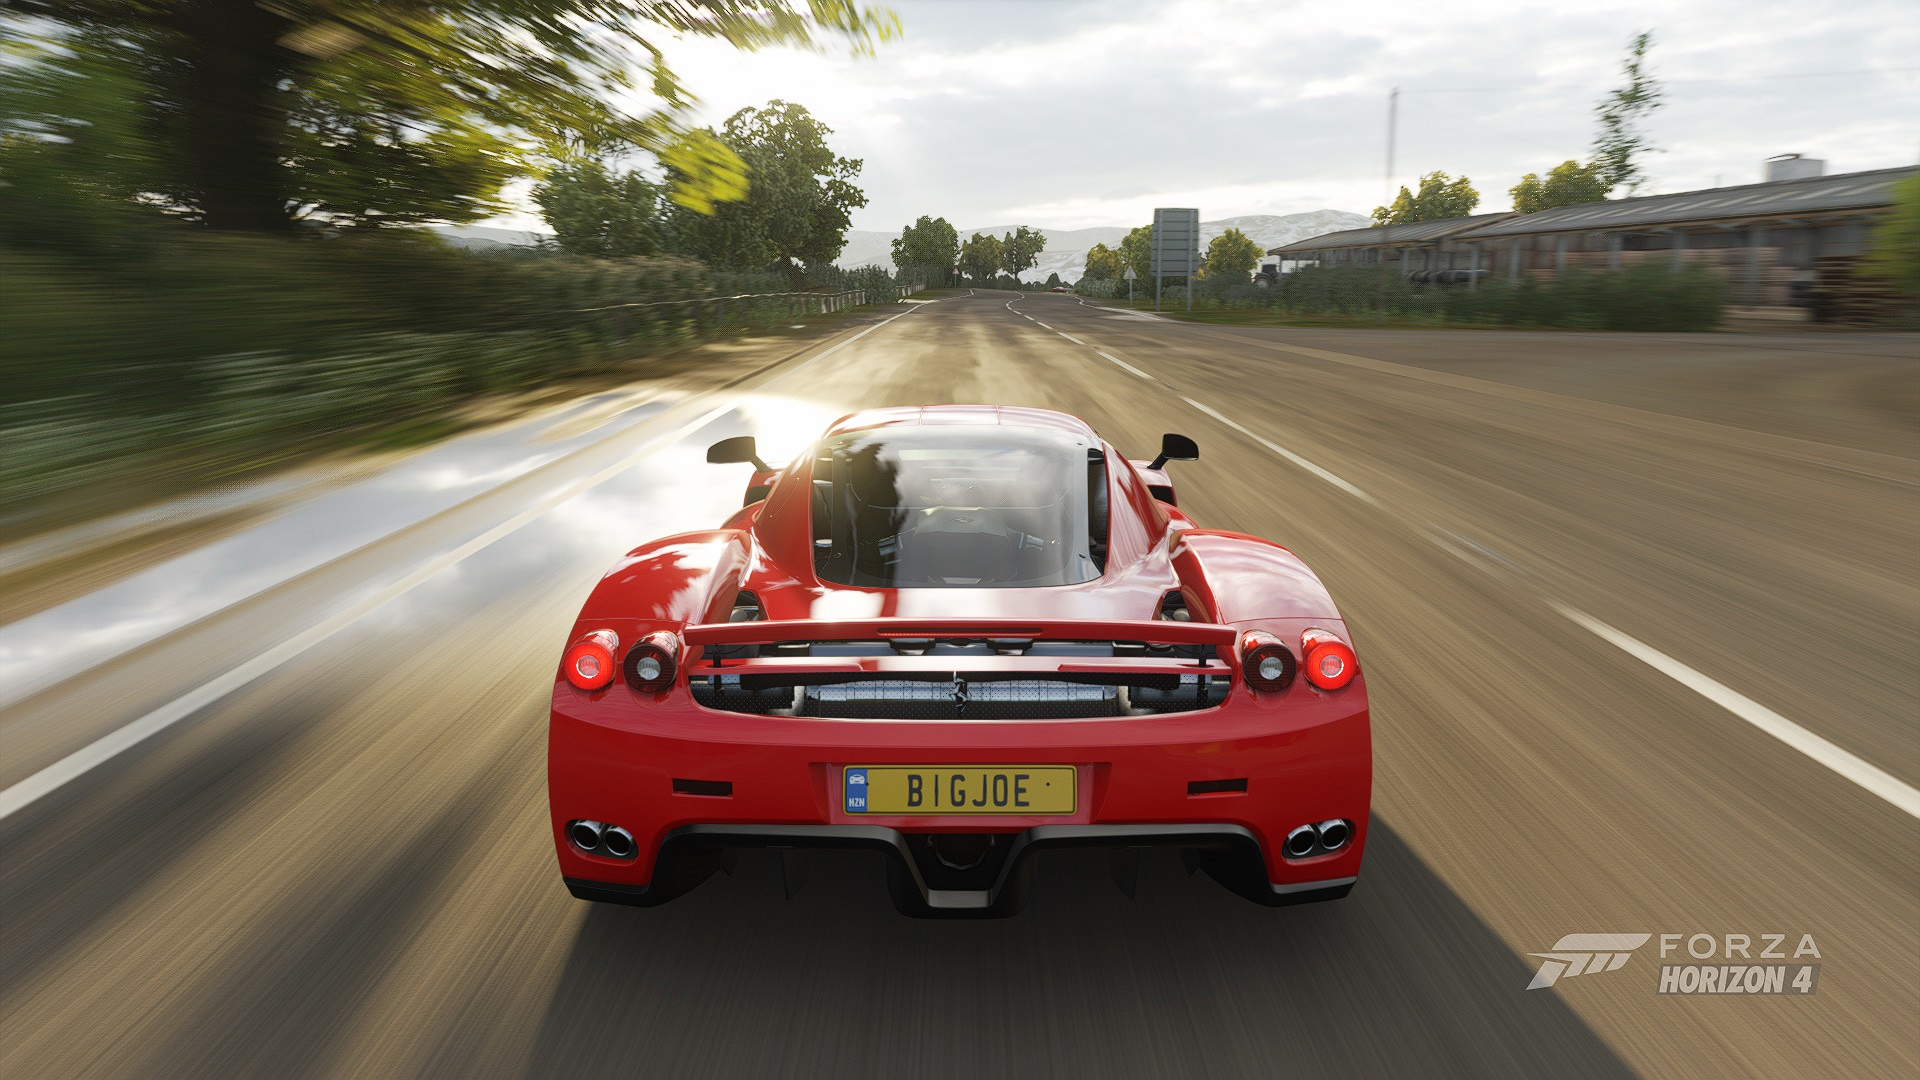 Enzo Ferrari Forza Horizon 4 Forza Horizon Forza PlaygroundGames CGi Car Driving Video Games Ferrari 1920x1080